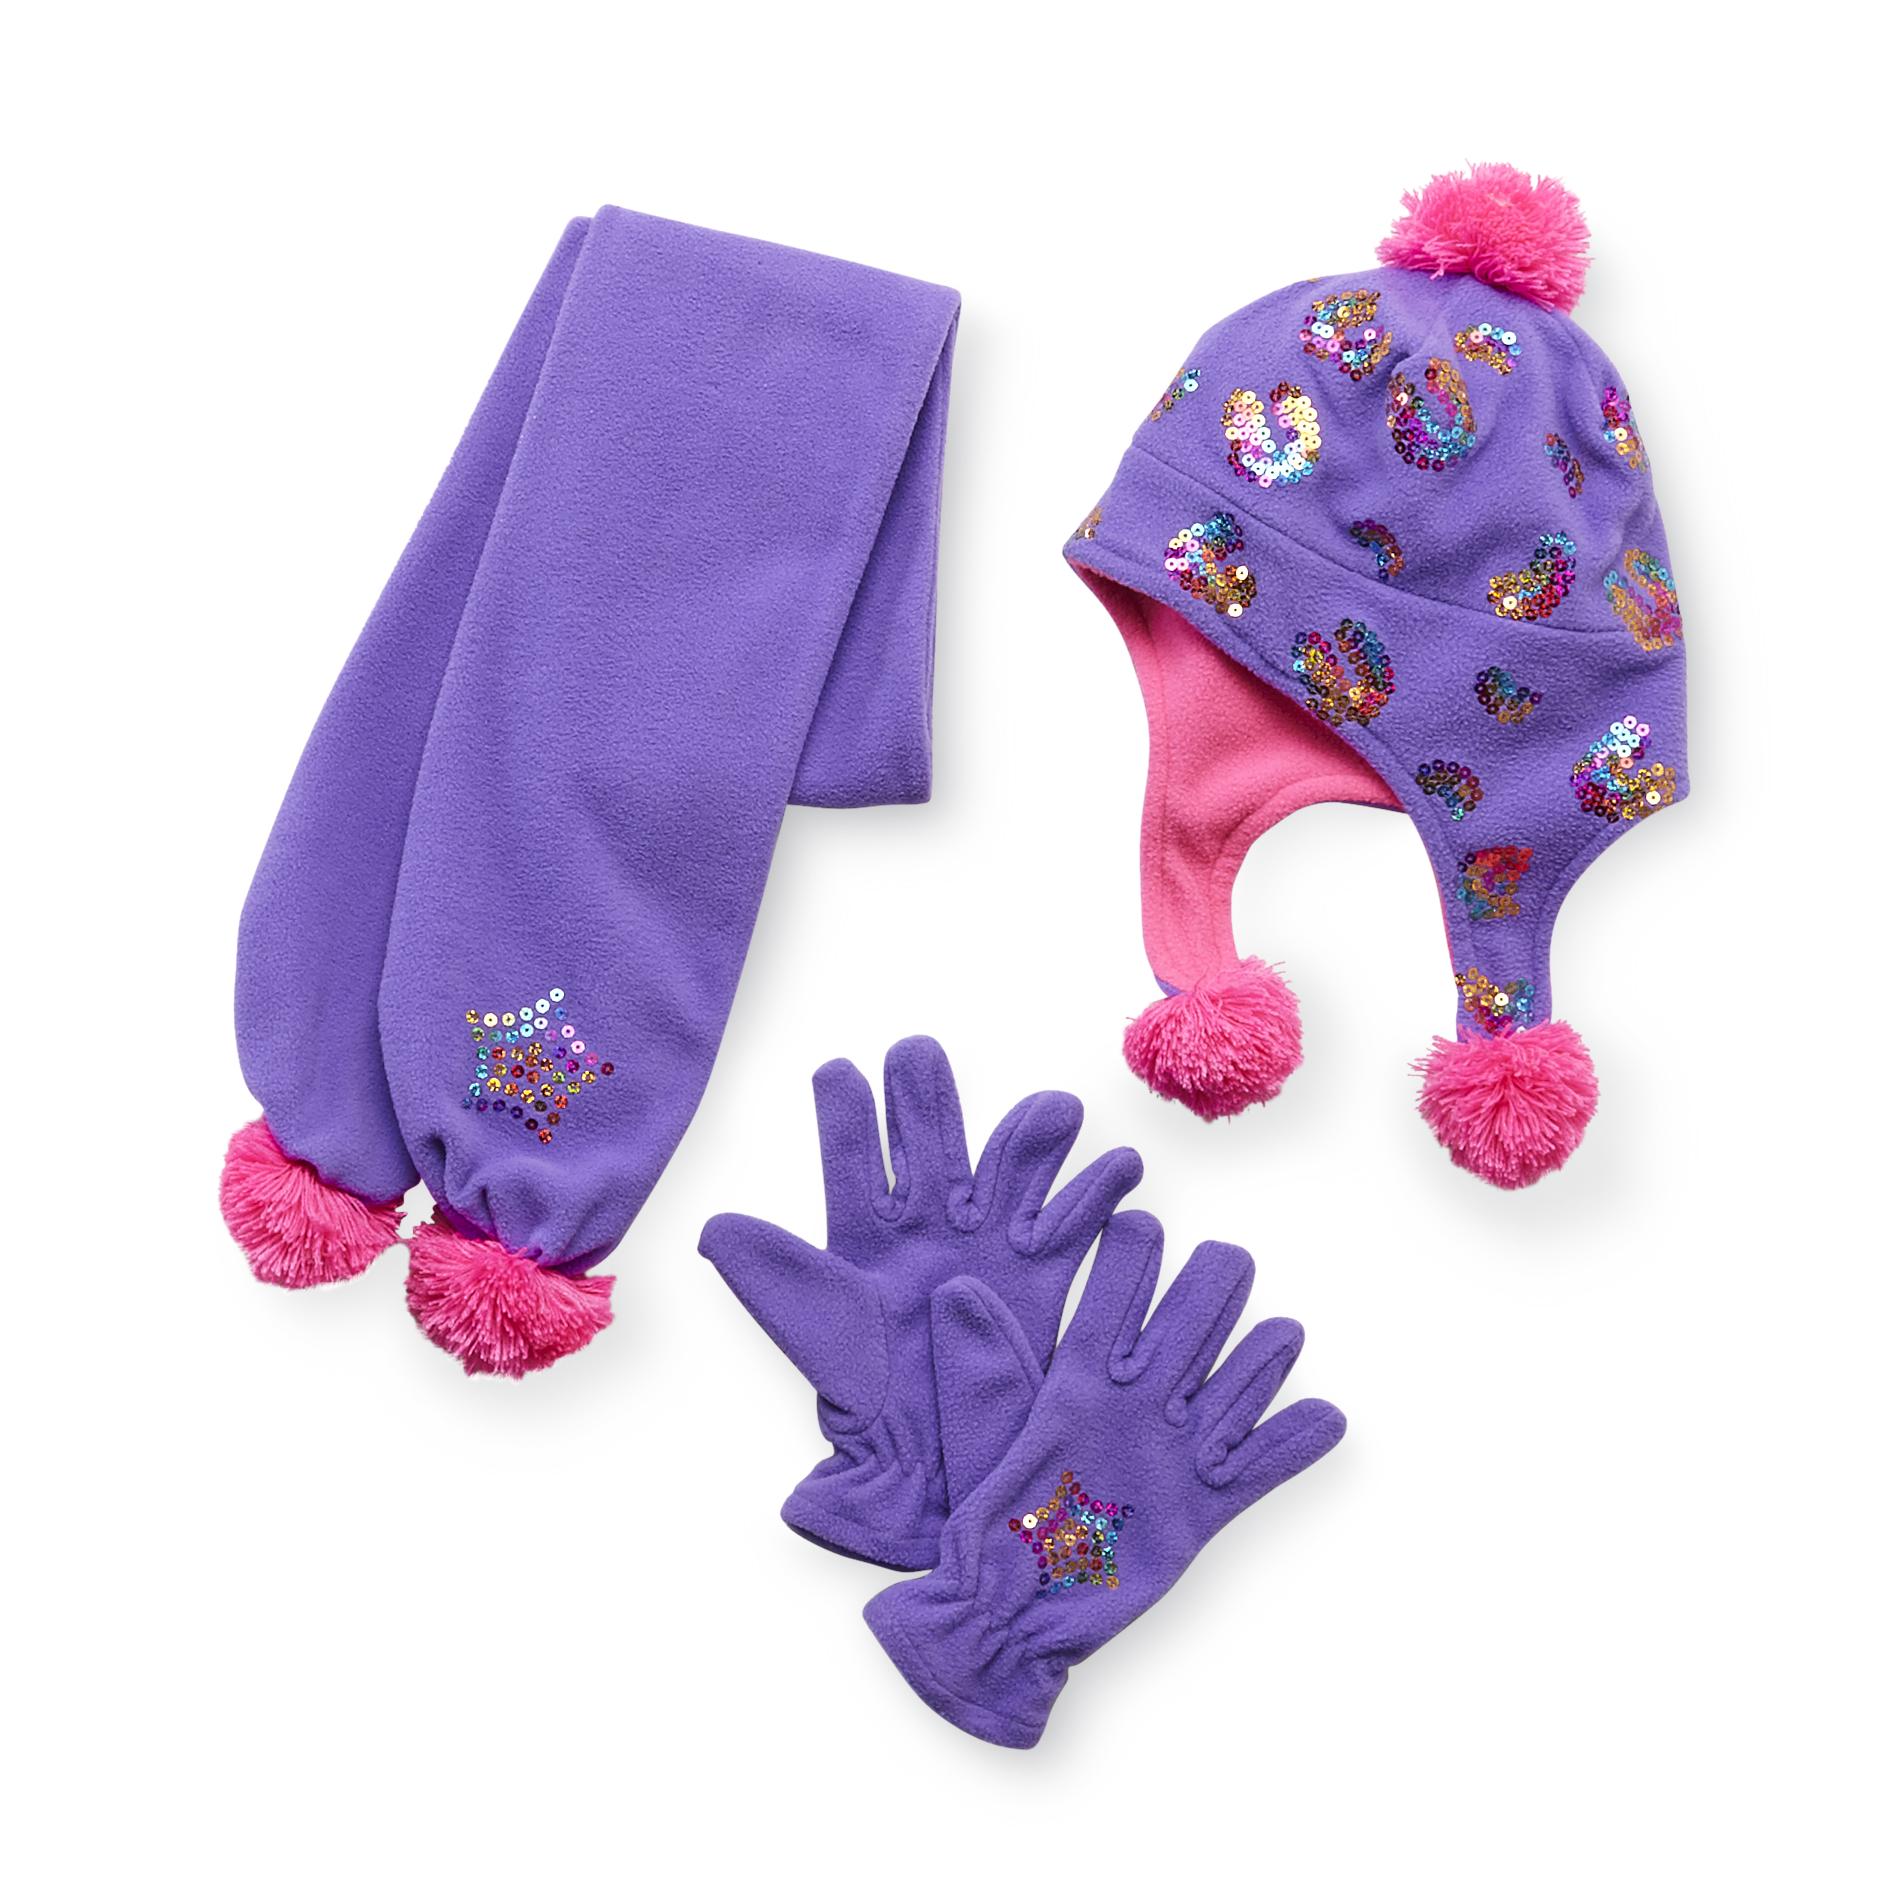 Athletech Girl's Fleece Hat  Scarf & Gloves - Sequins